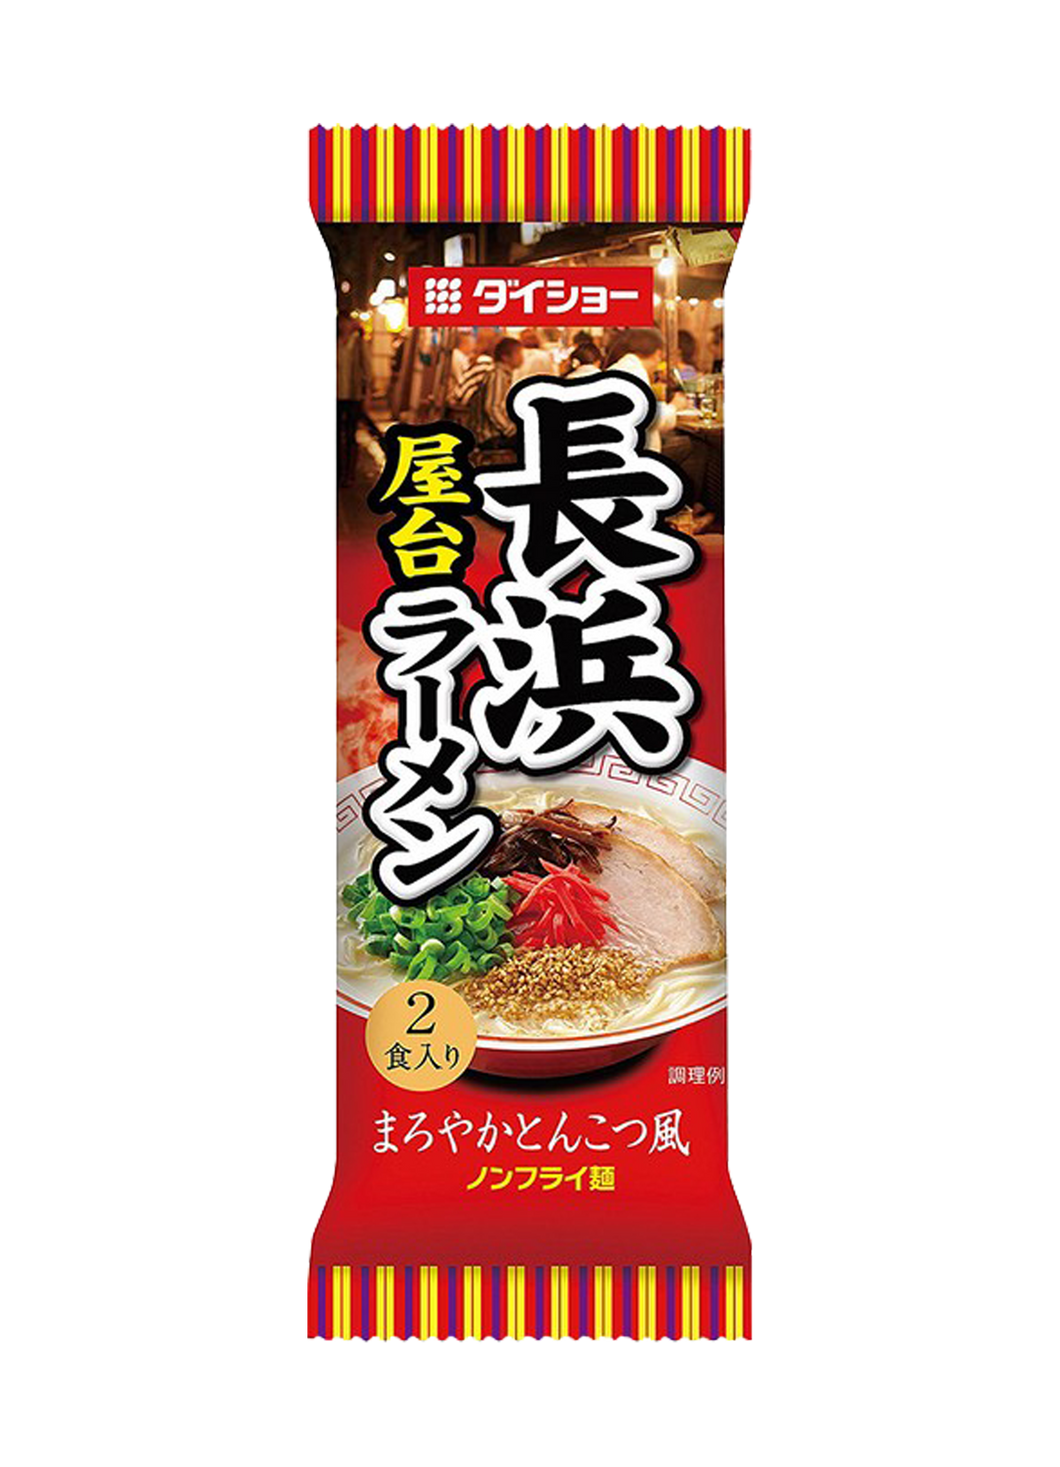 Japanese Ramen Noodle with Soup (Nagahama Yatai Ramen GB) Daisho 188g